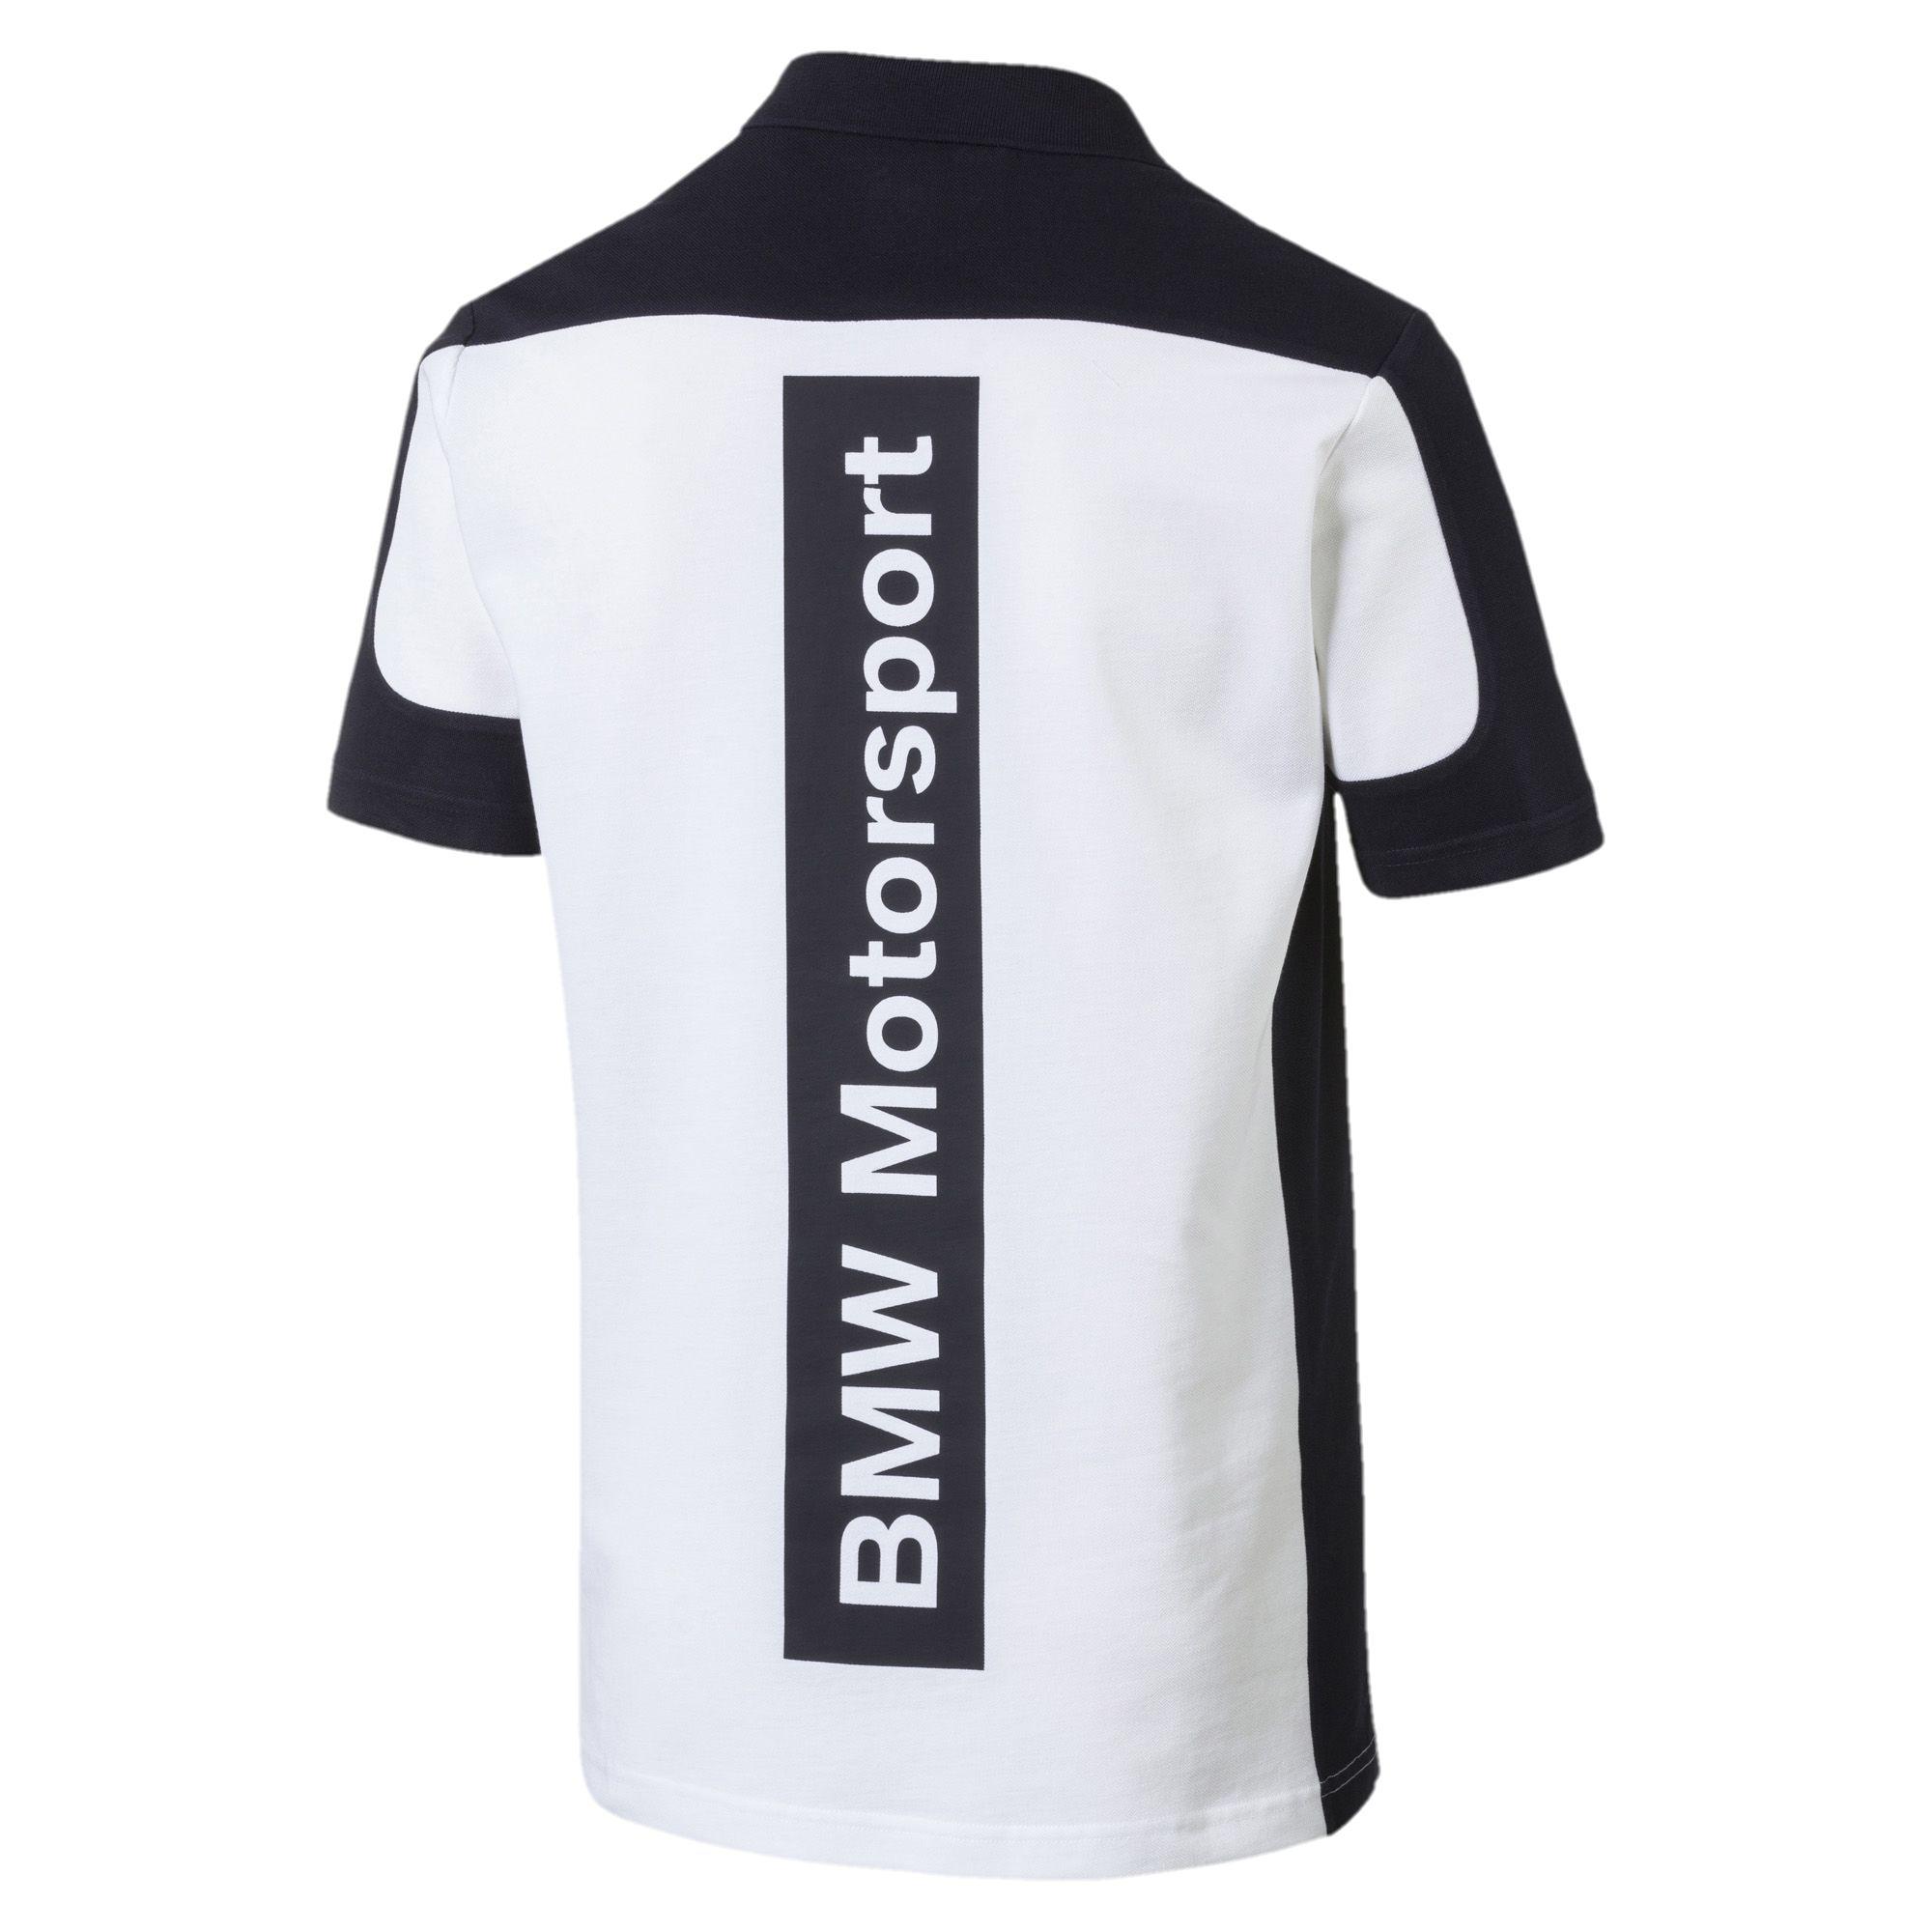 Buy > puma bmw polo shirt > in stock